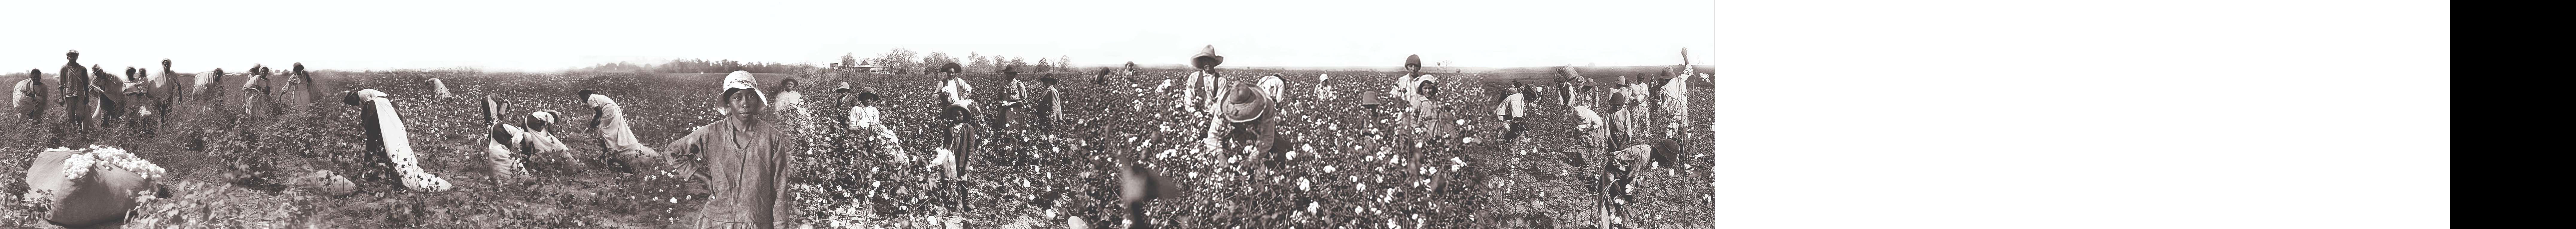 Harvest of SHAME! Photo manipulation using archival images on cotton field slaves